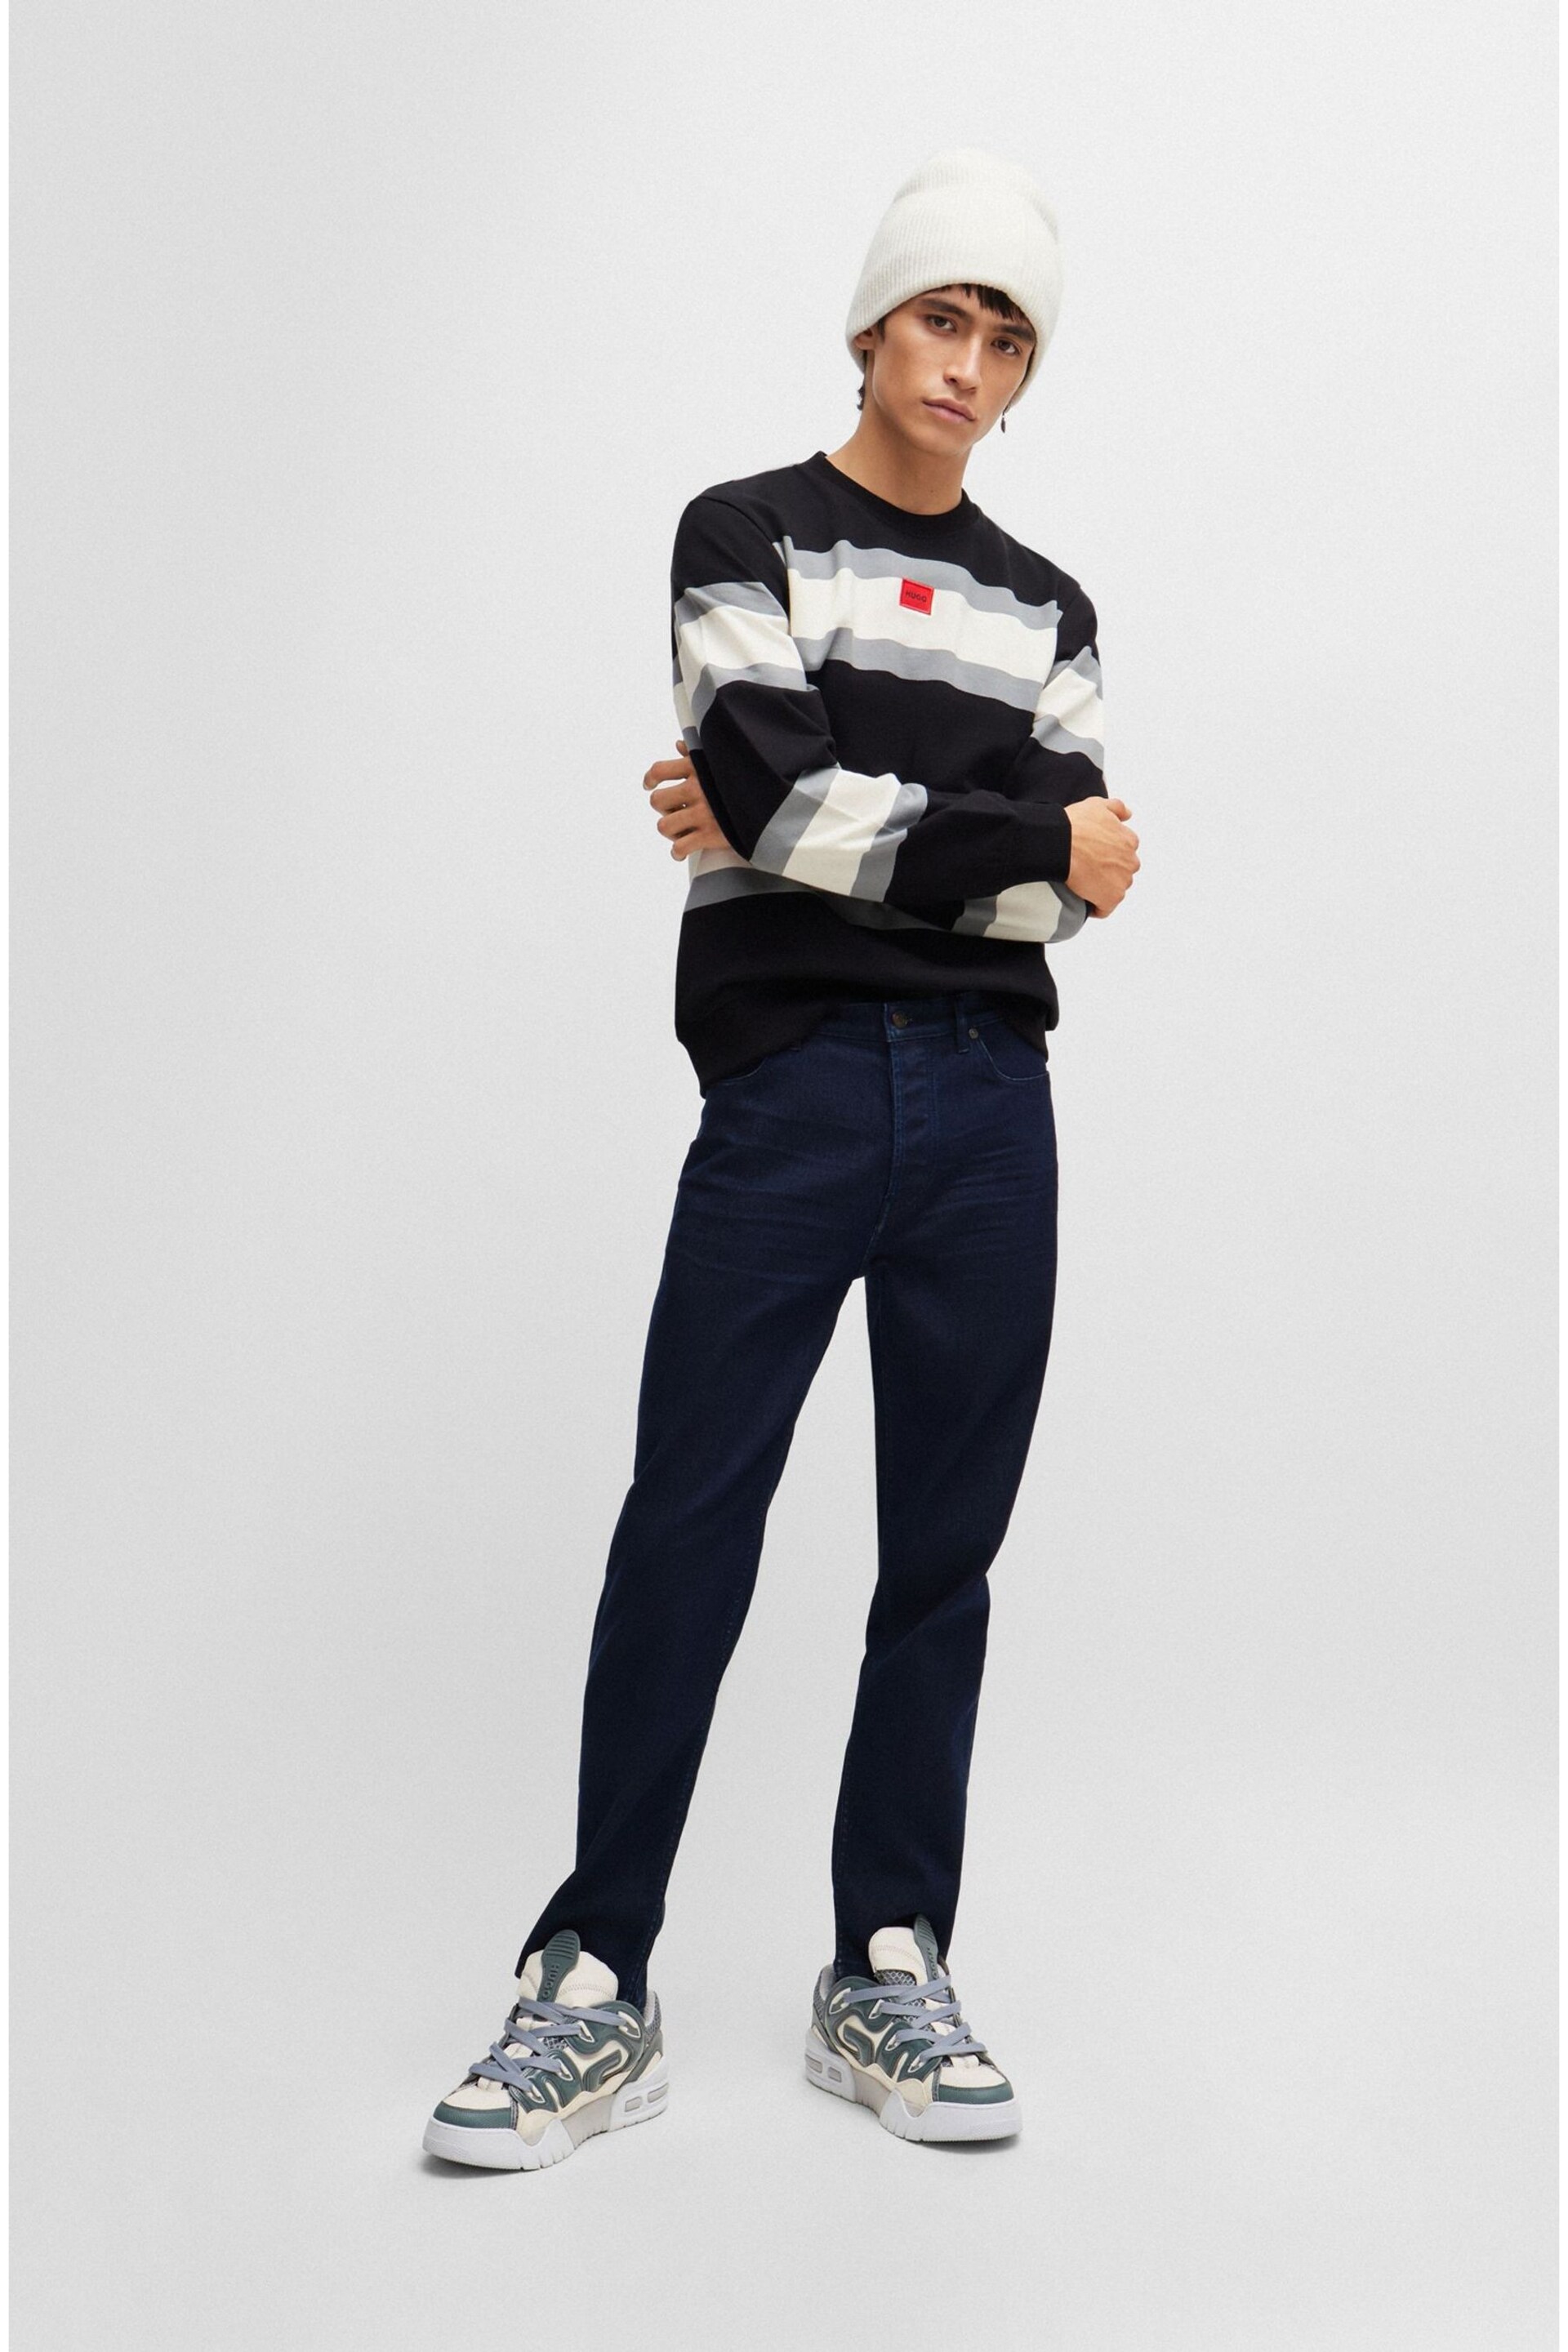 HUGO Tapered-Fit Jeans in Dark-Blue Comfort-Stretch Denim - Image 3 of 5